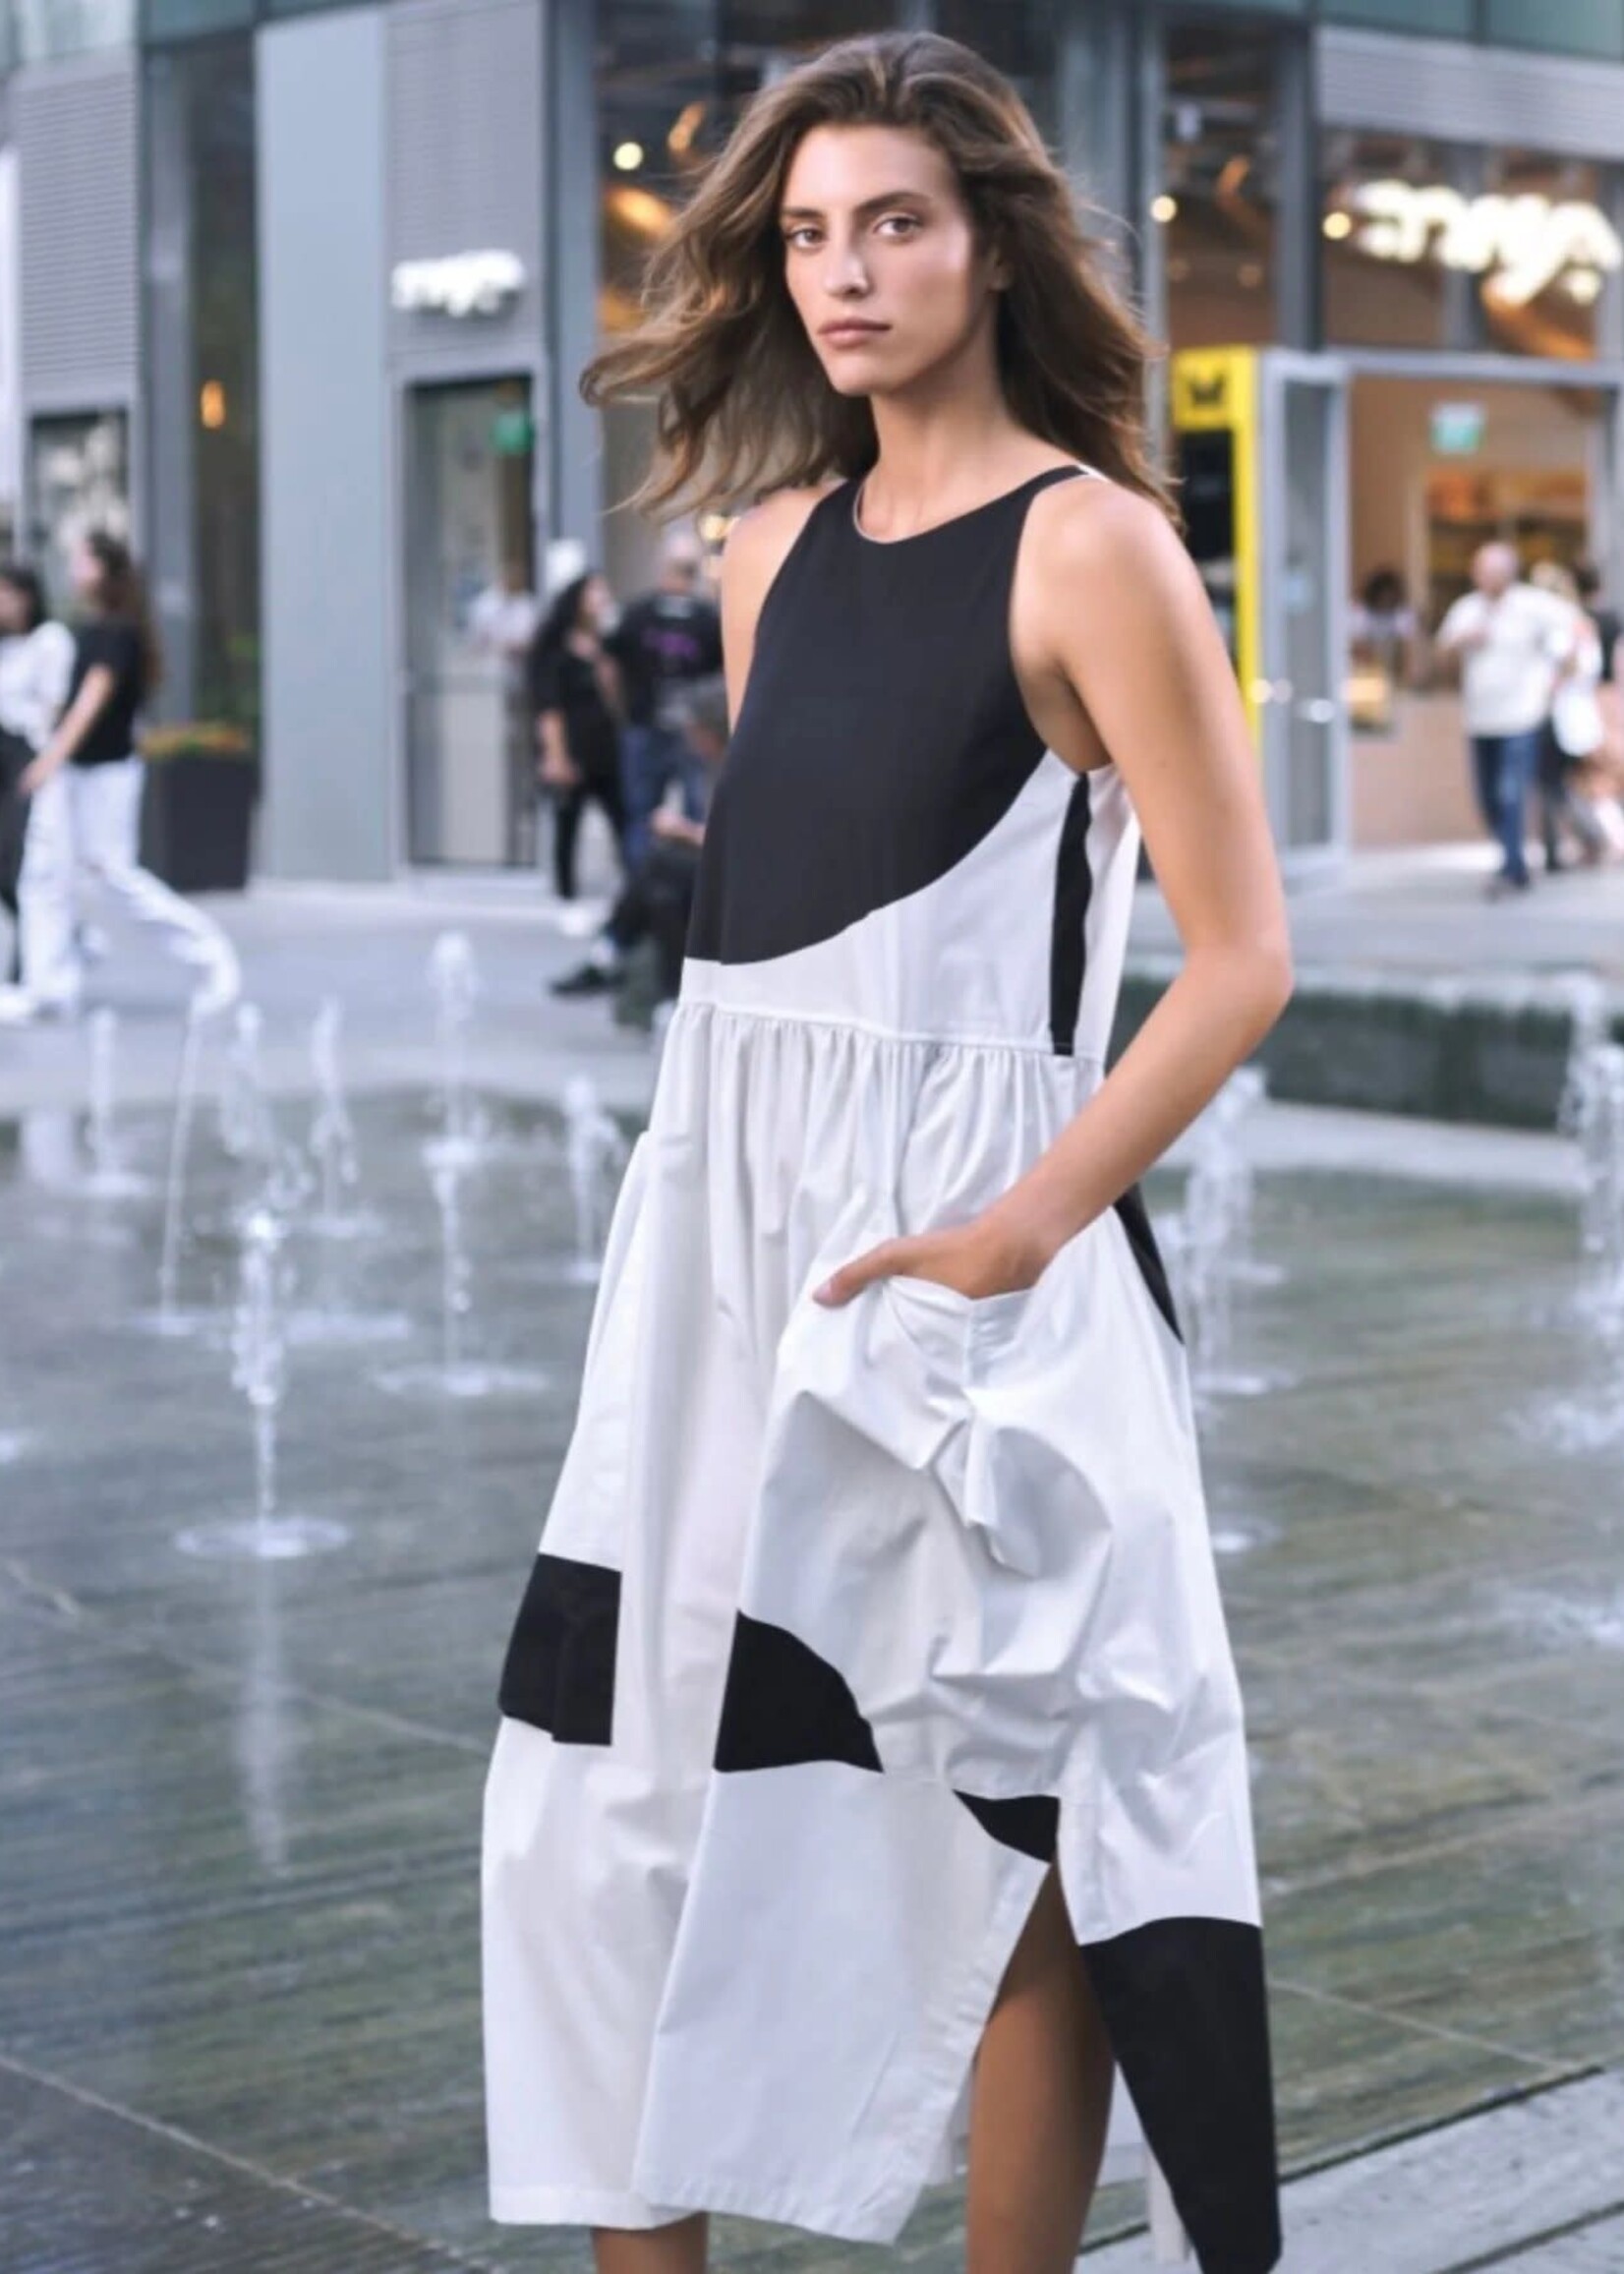 ALEMBIKA Urban Harper Pocket Dress, White/Black